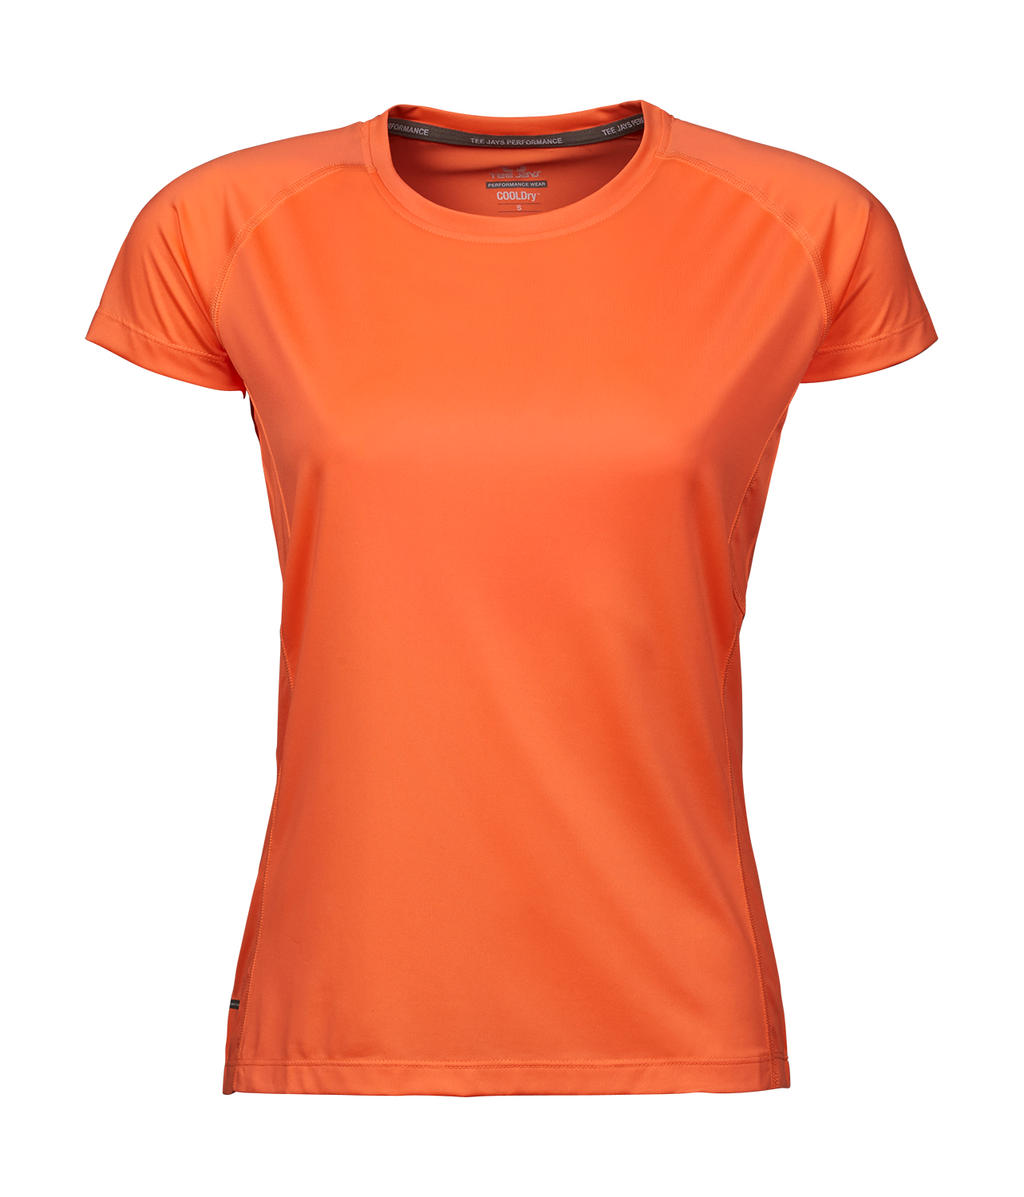 Tee Jays COOLdry Ladies Damen Fitness Sport Training T-Shirt